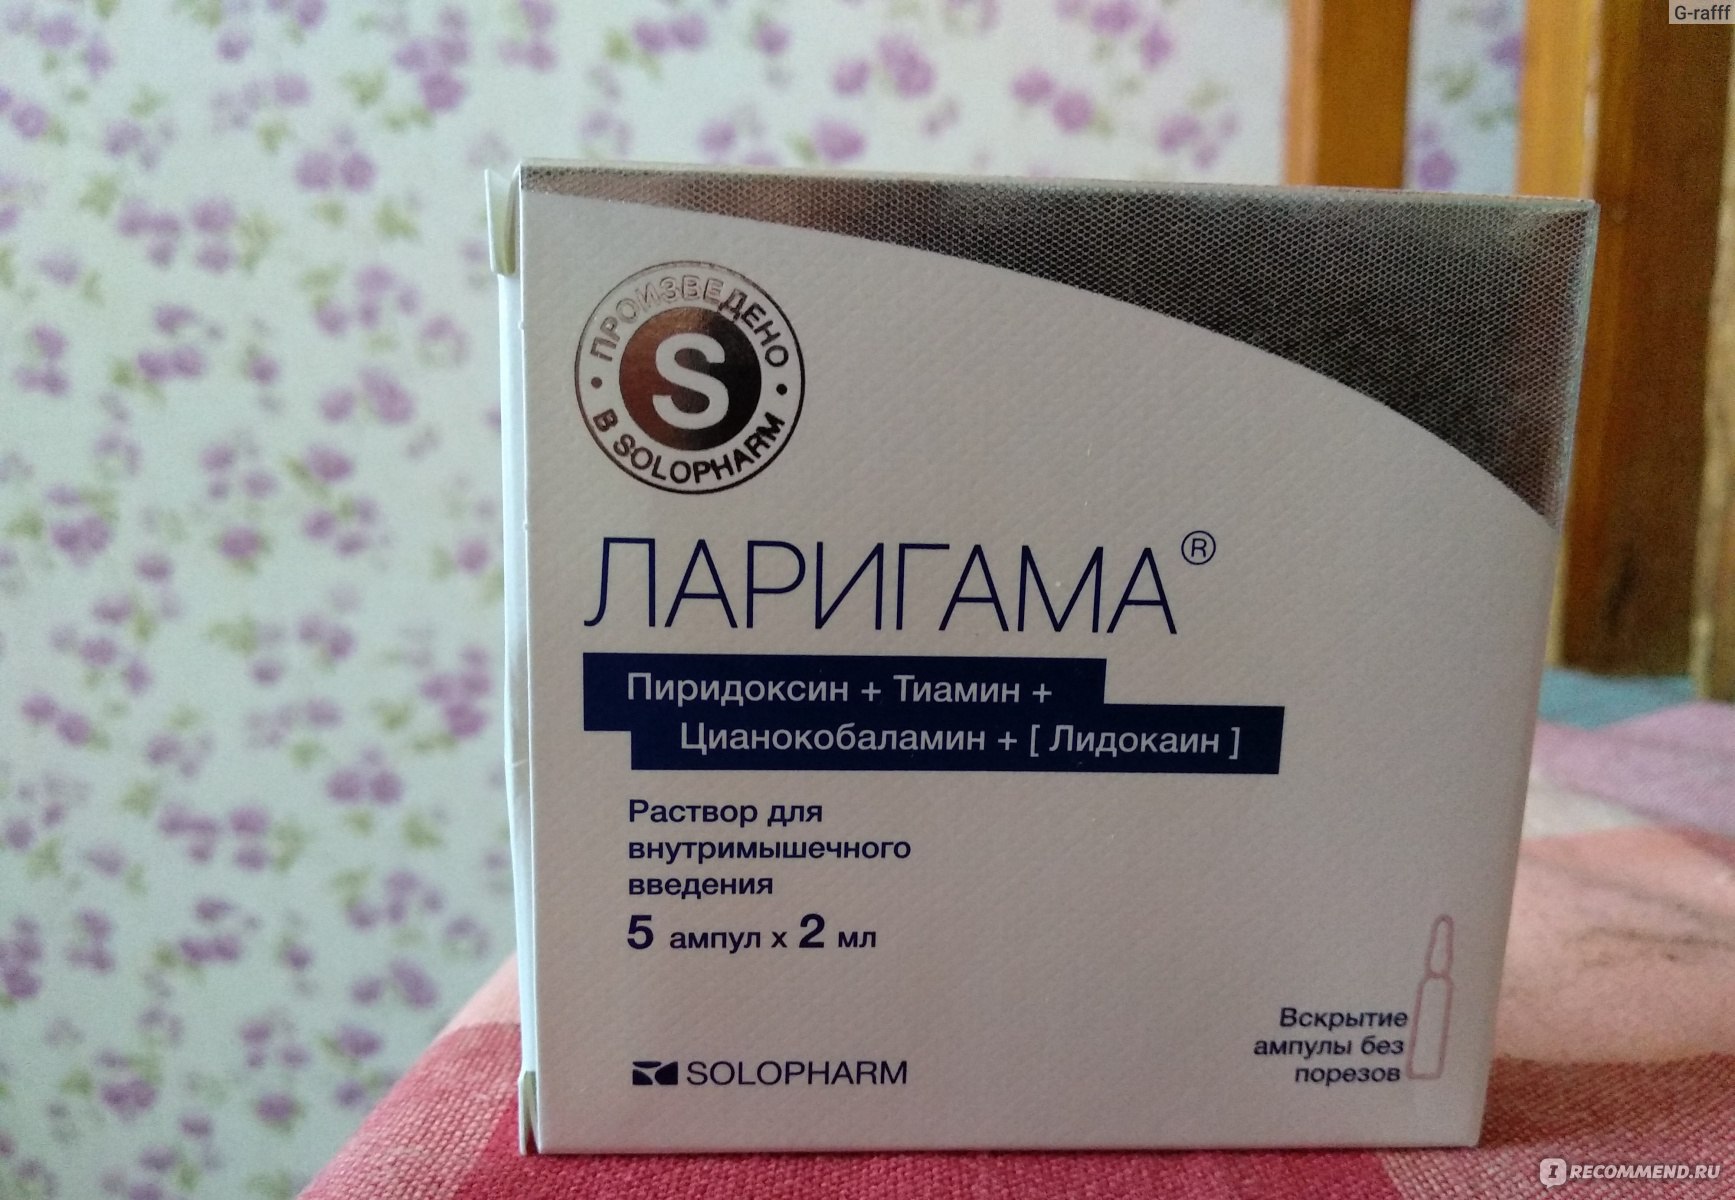 Препарат: ларигама в аптеках москвы